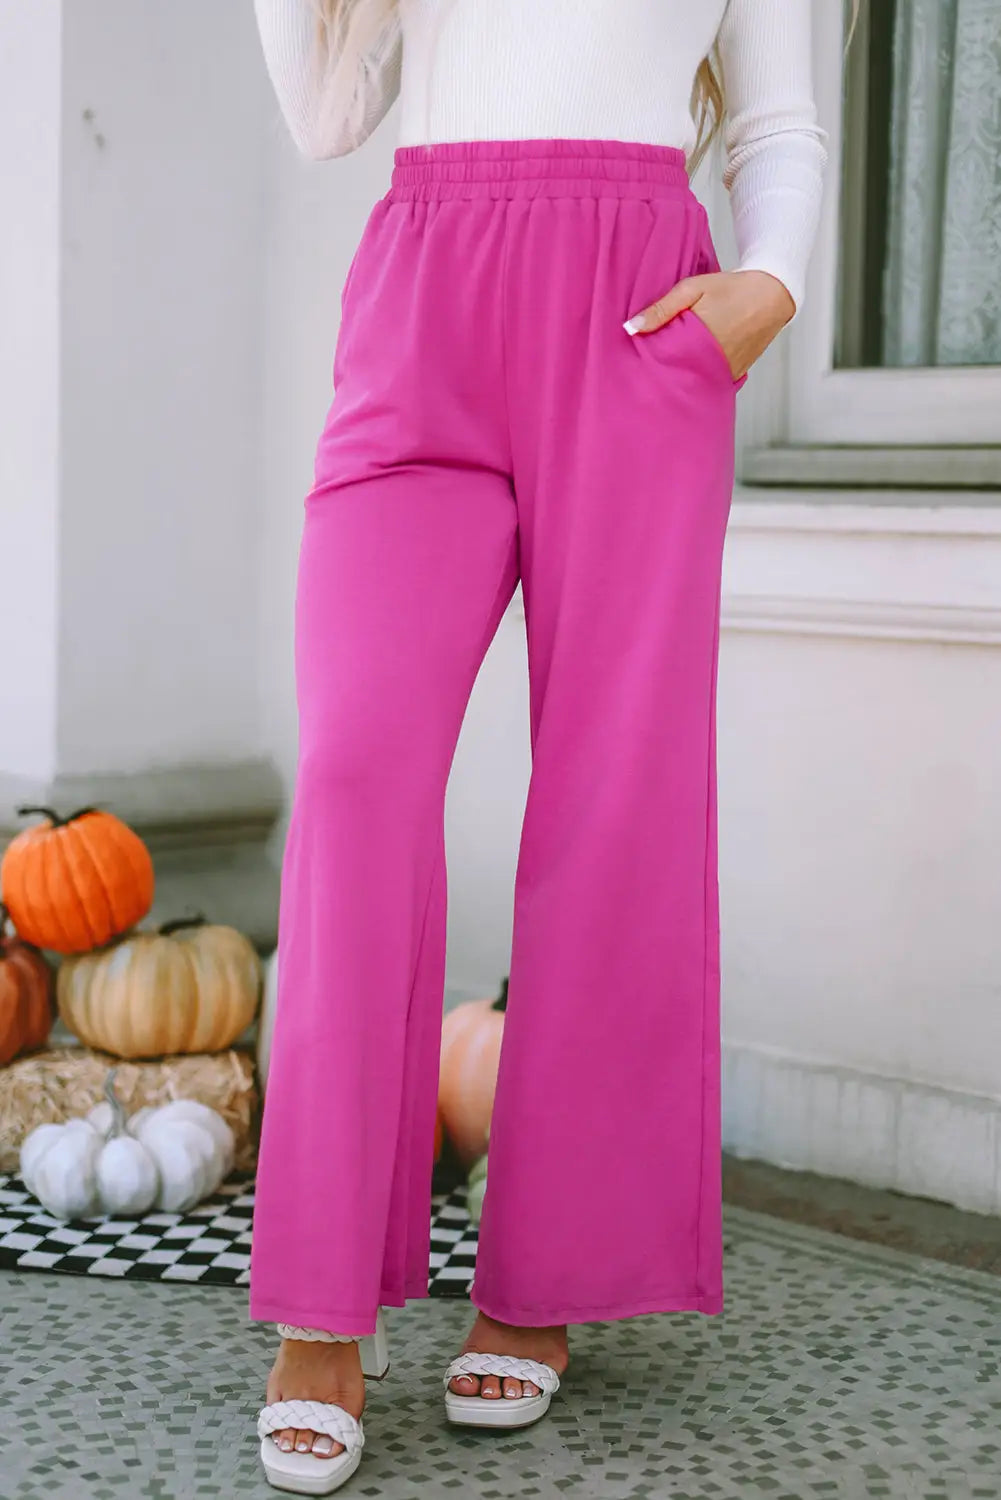 Rose elastic waist pocketed wide leg pants - s / 65% polyester + 30% cotton + 5% elastane